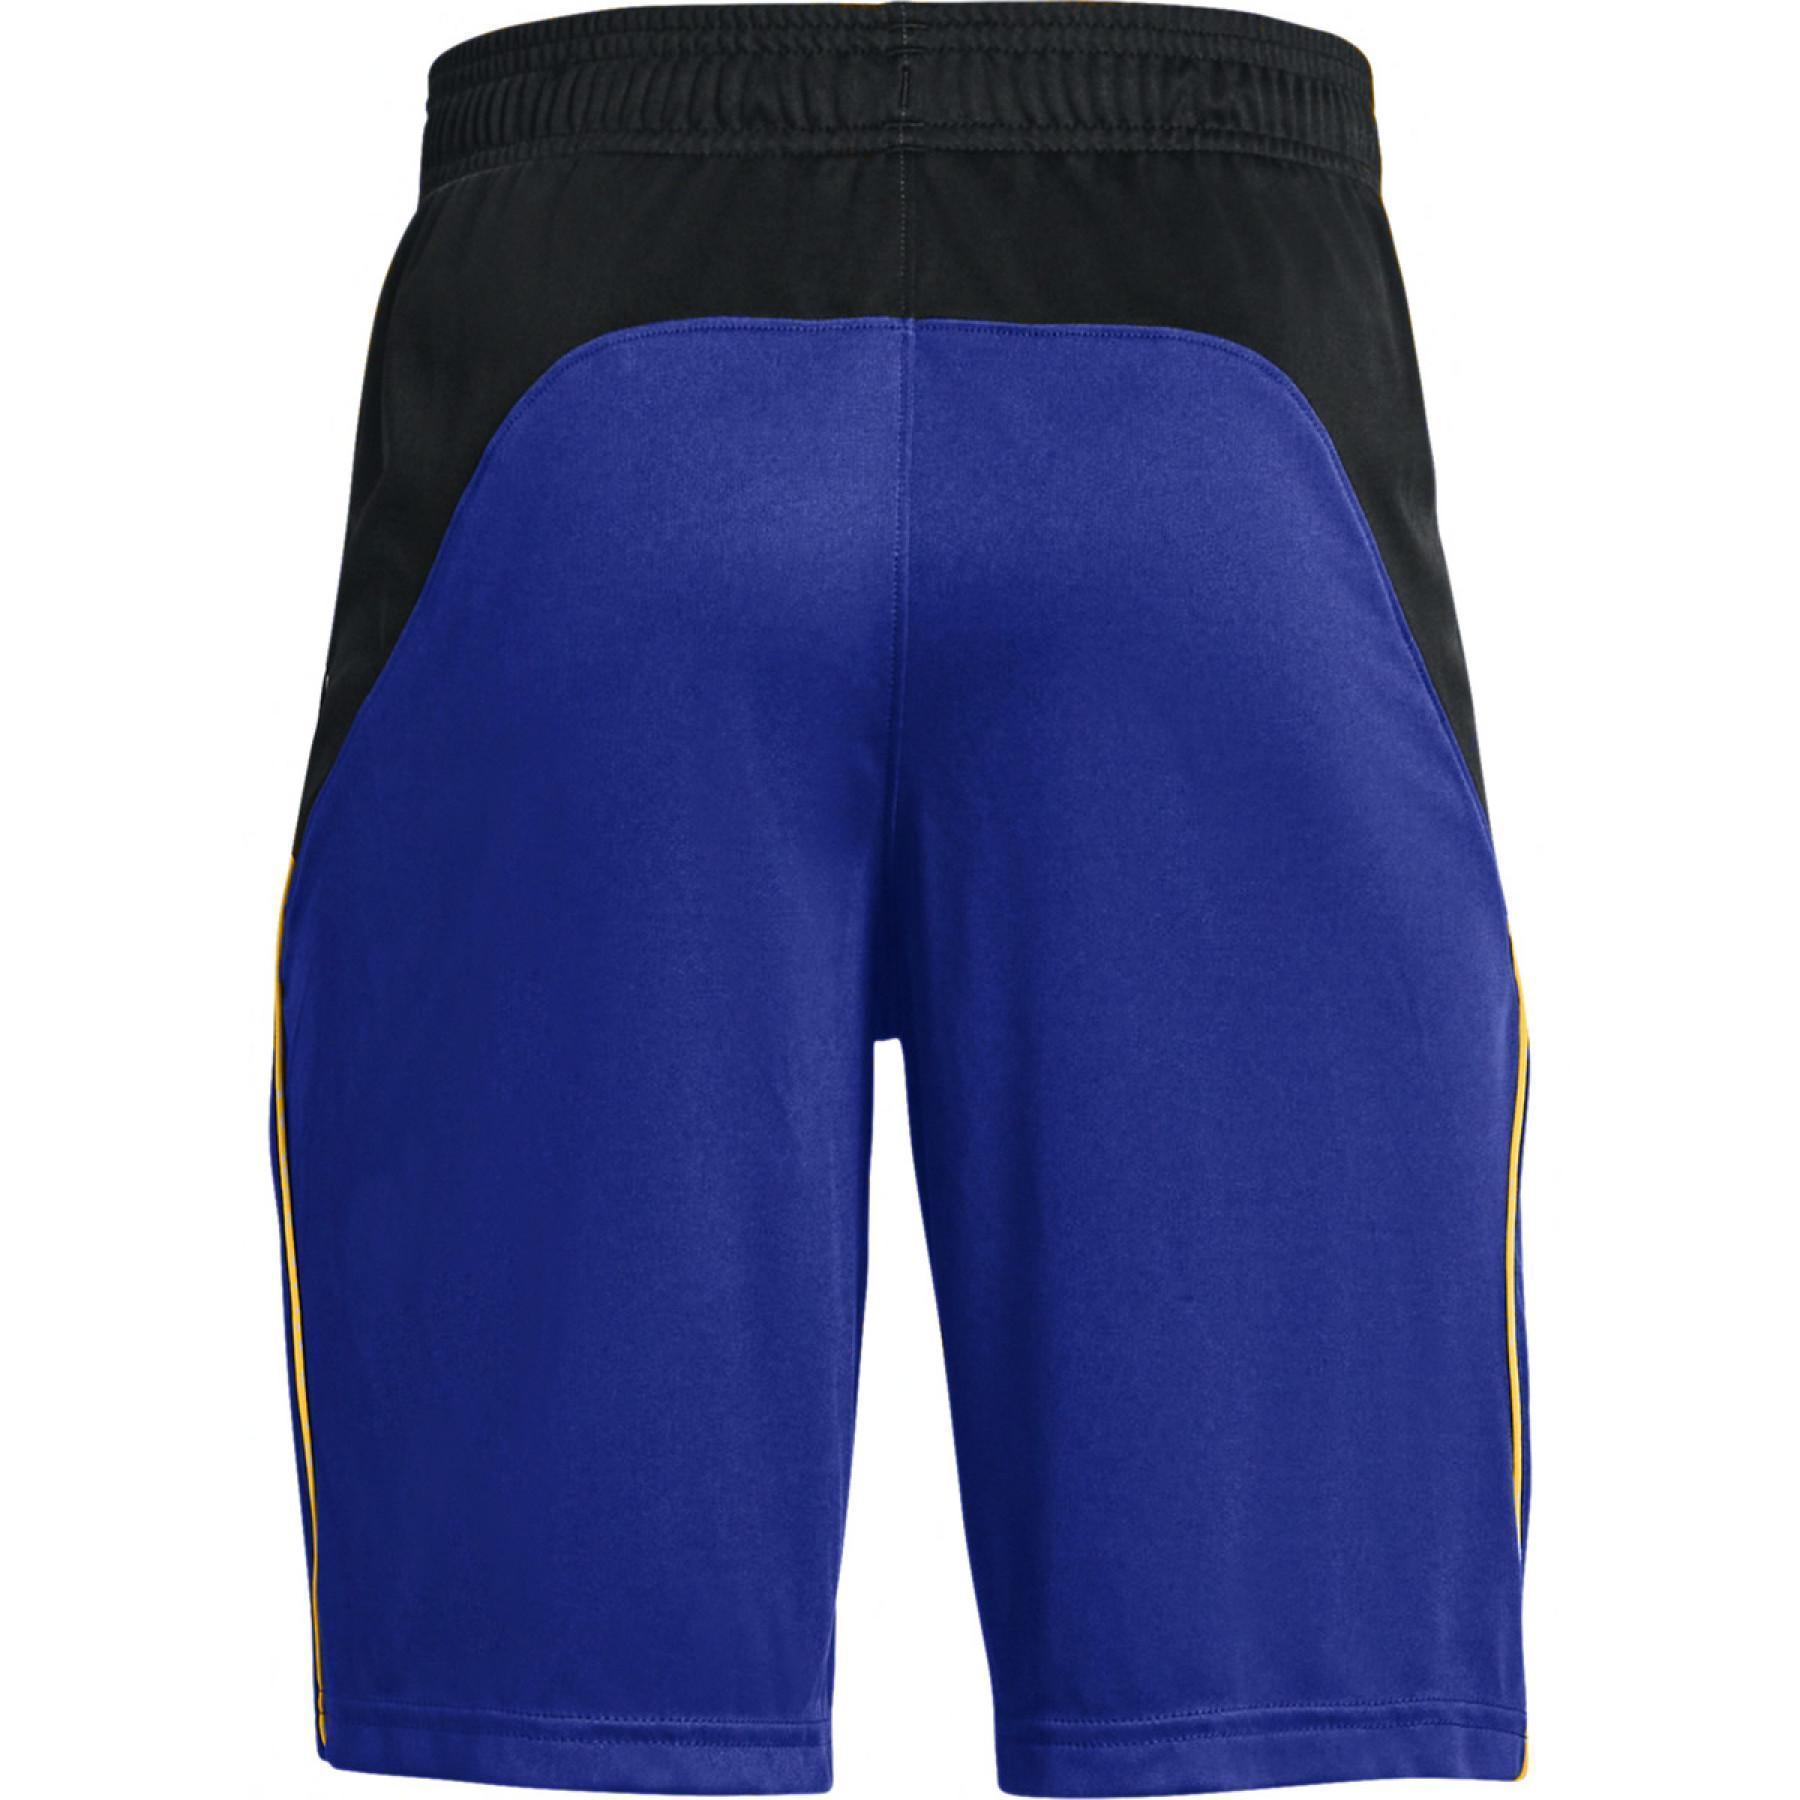 Pantalones cortos de baloncesto para chicos -ball curry sc hoops